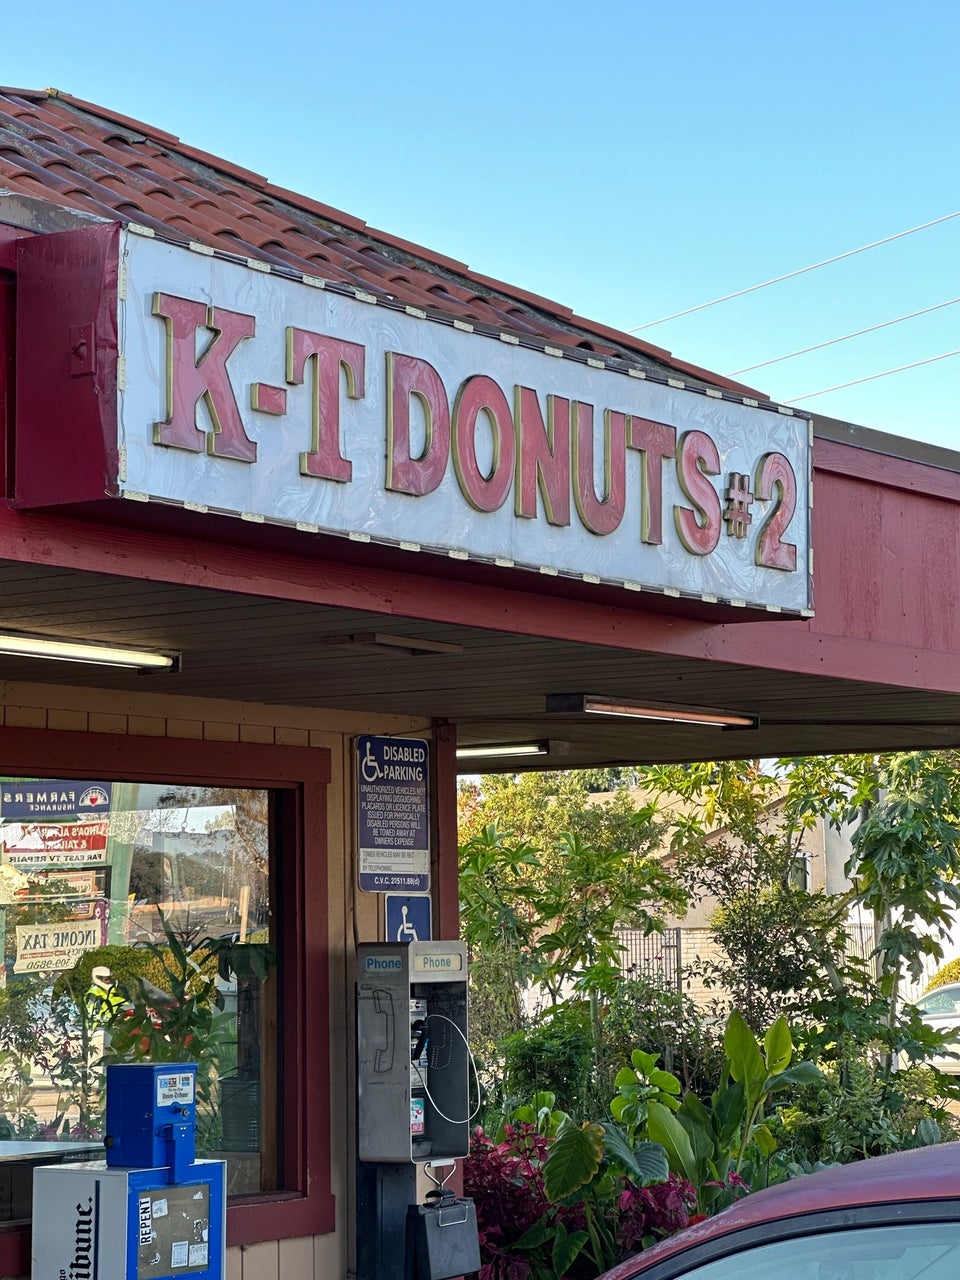 K T Donuts #2